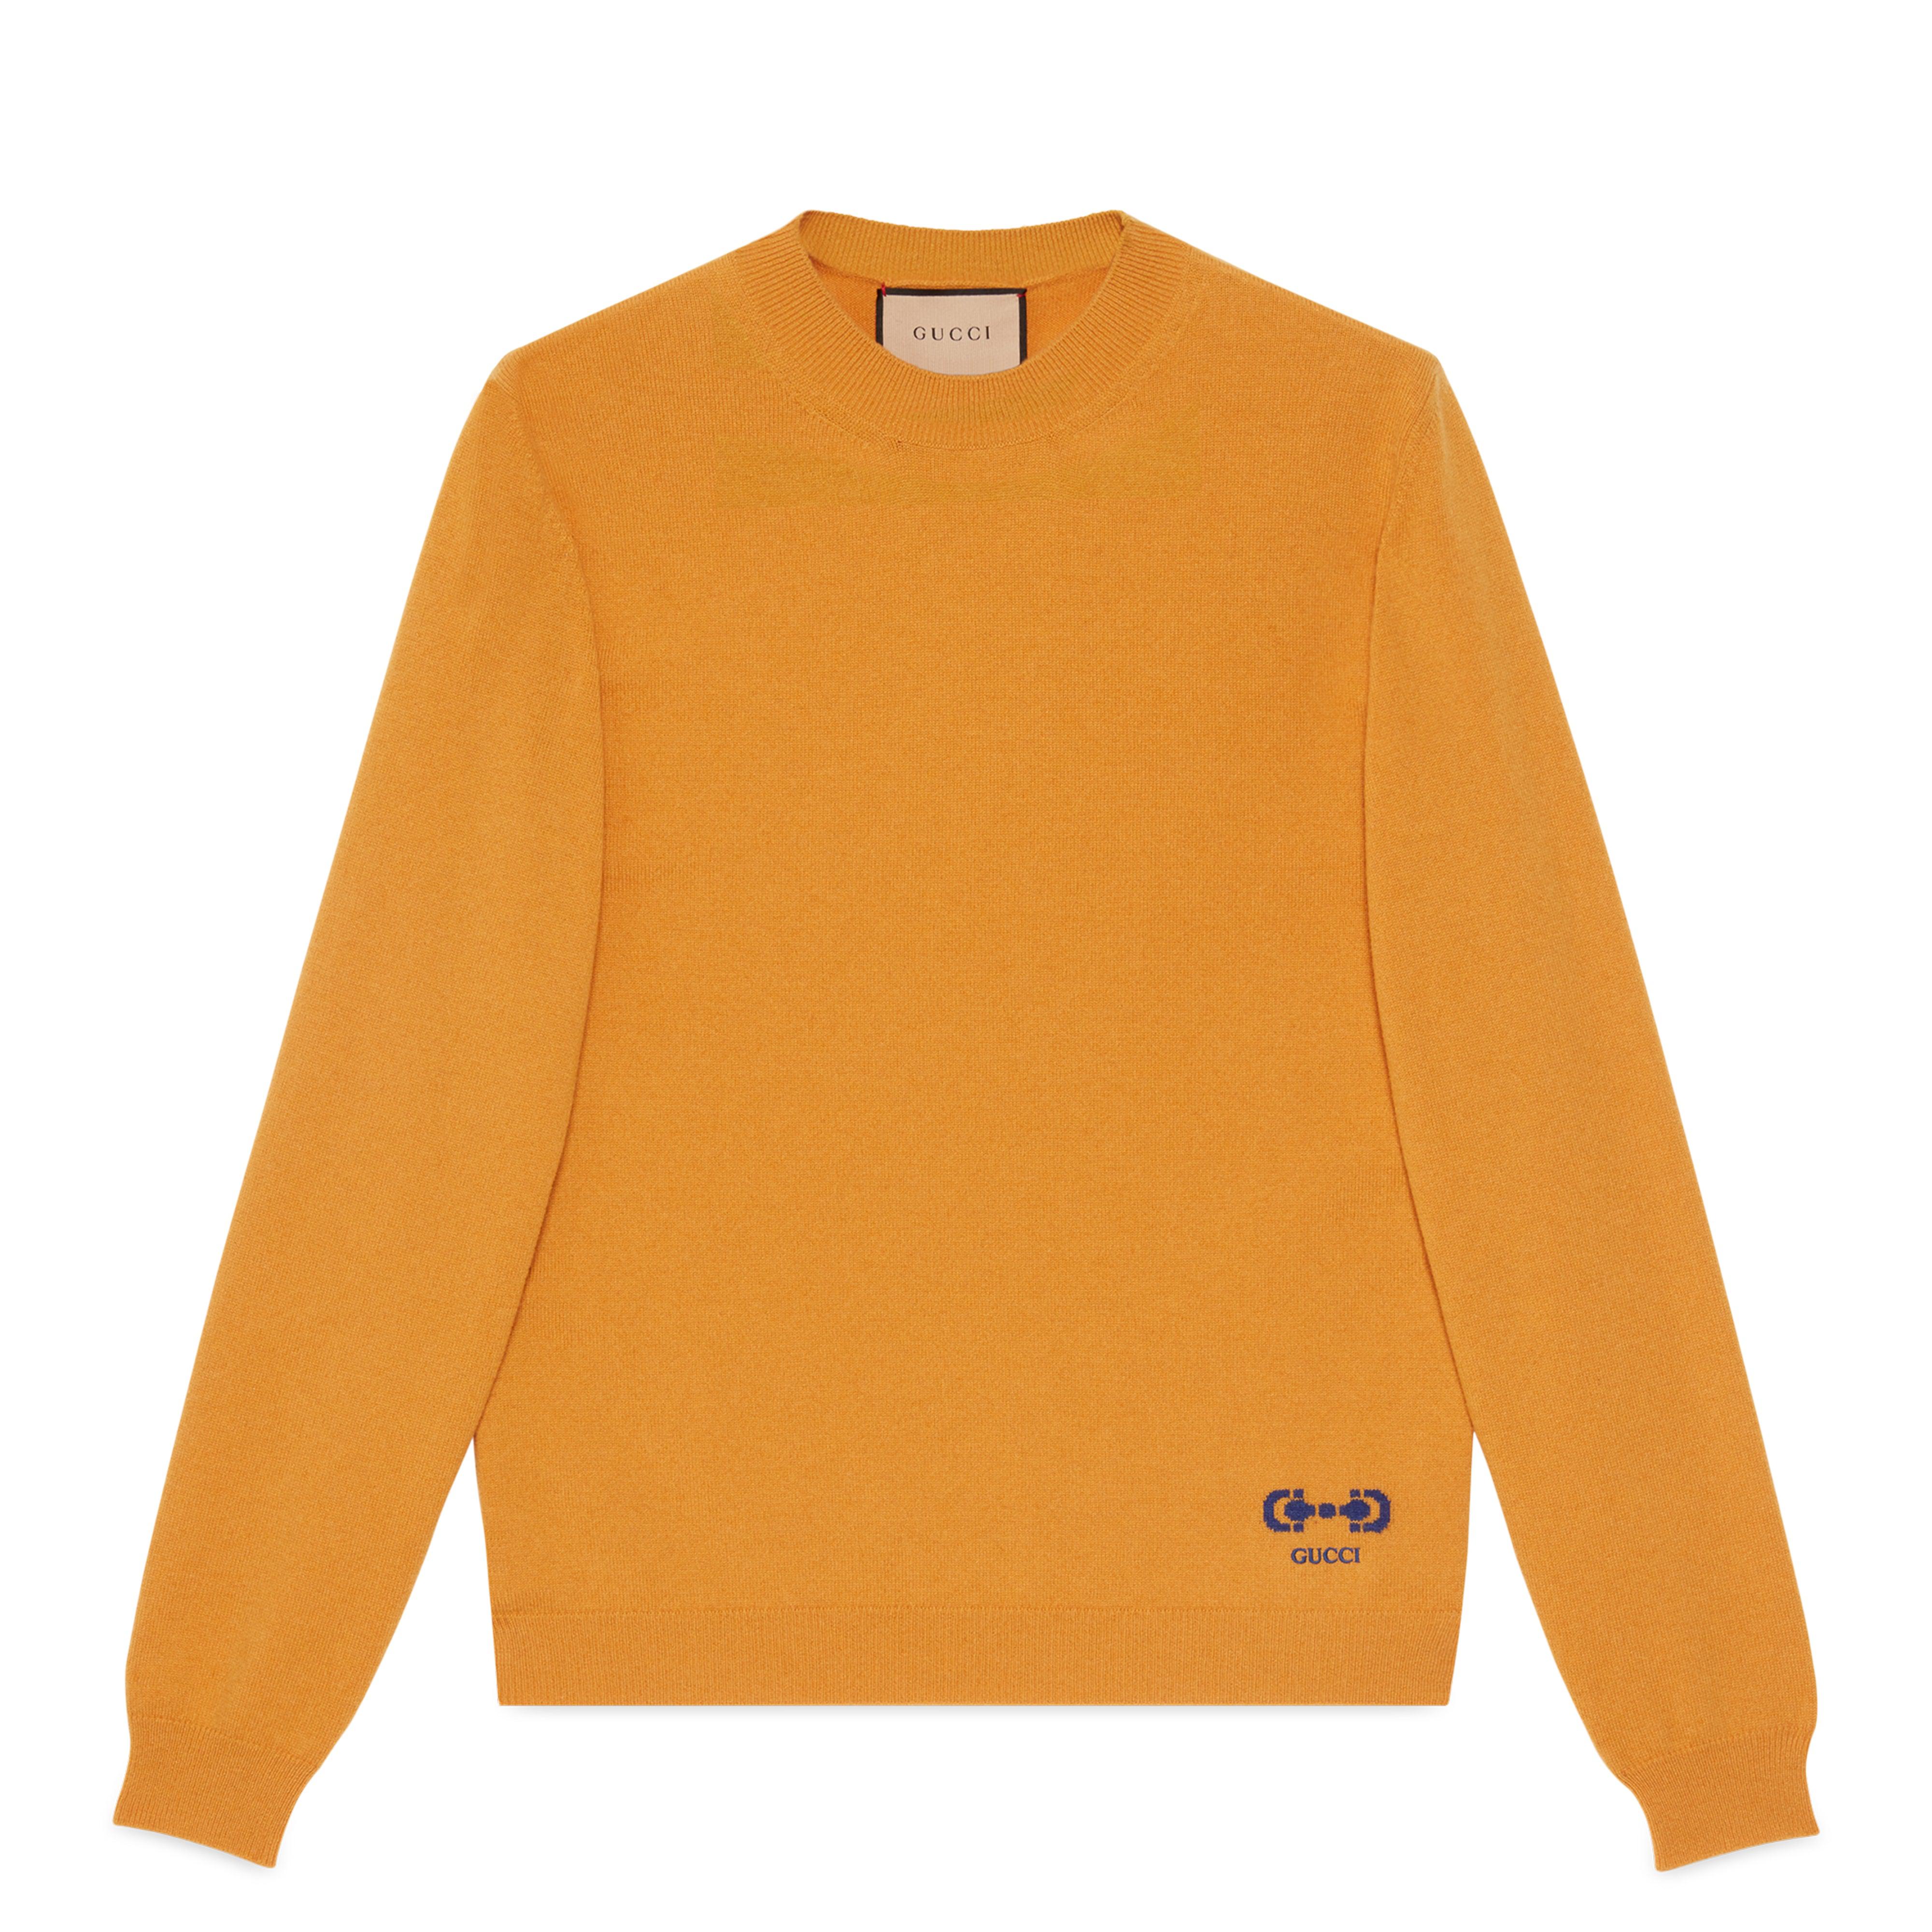 Gucci Men's Knit Cashmere Jumper (Orange) by GUCCI